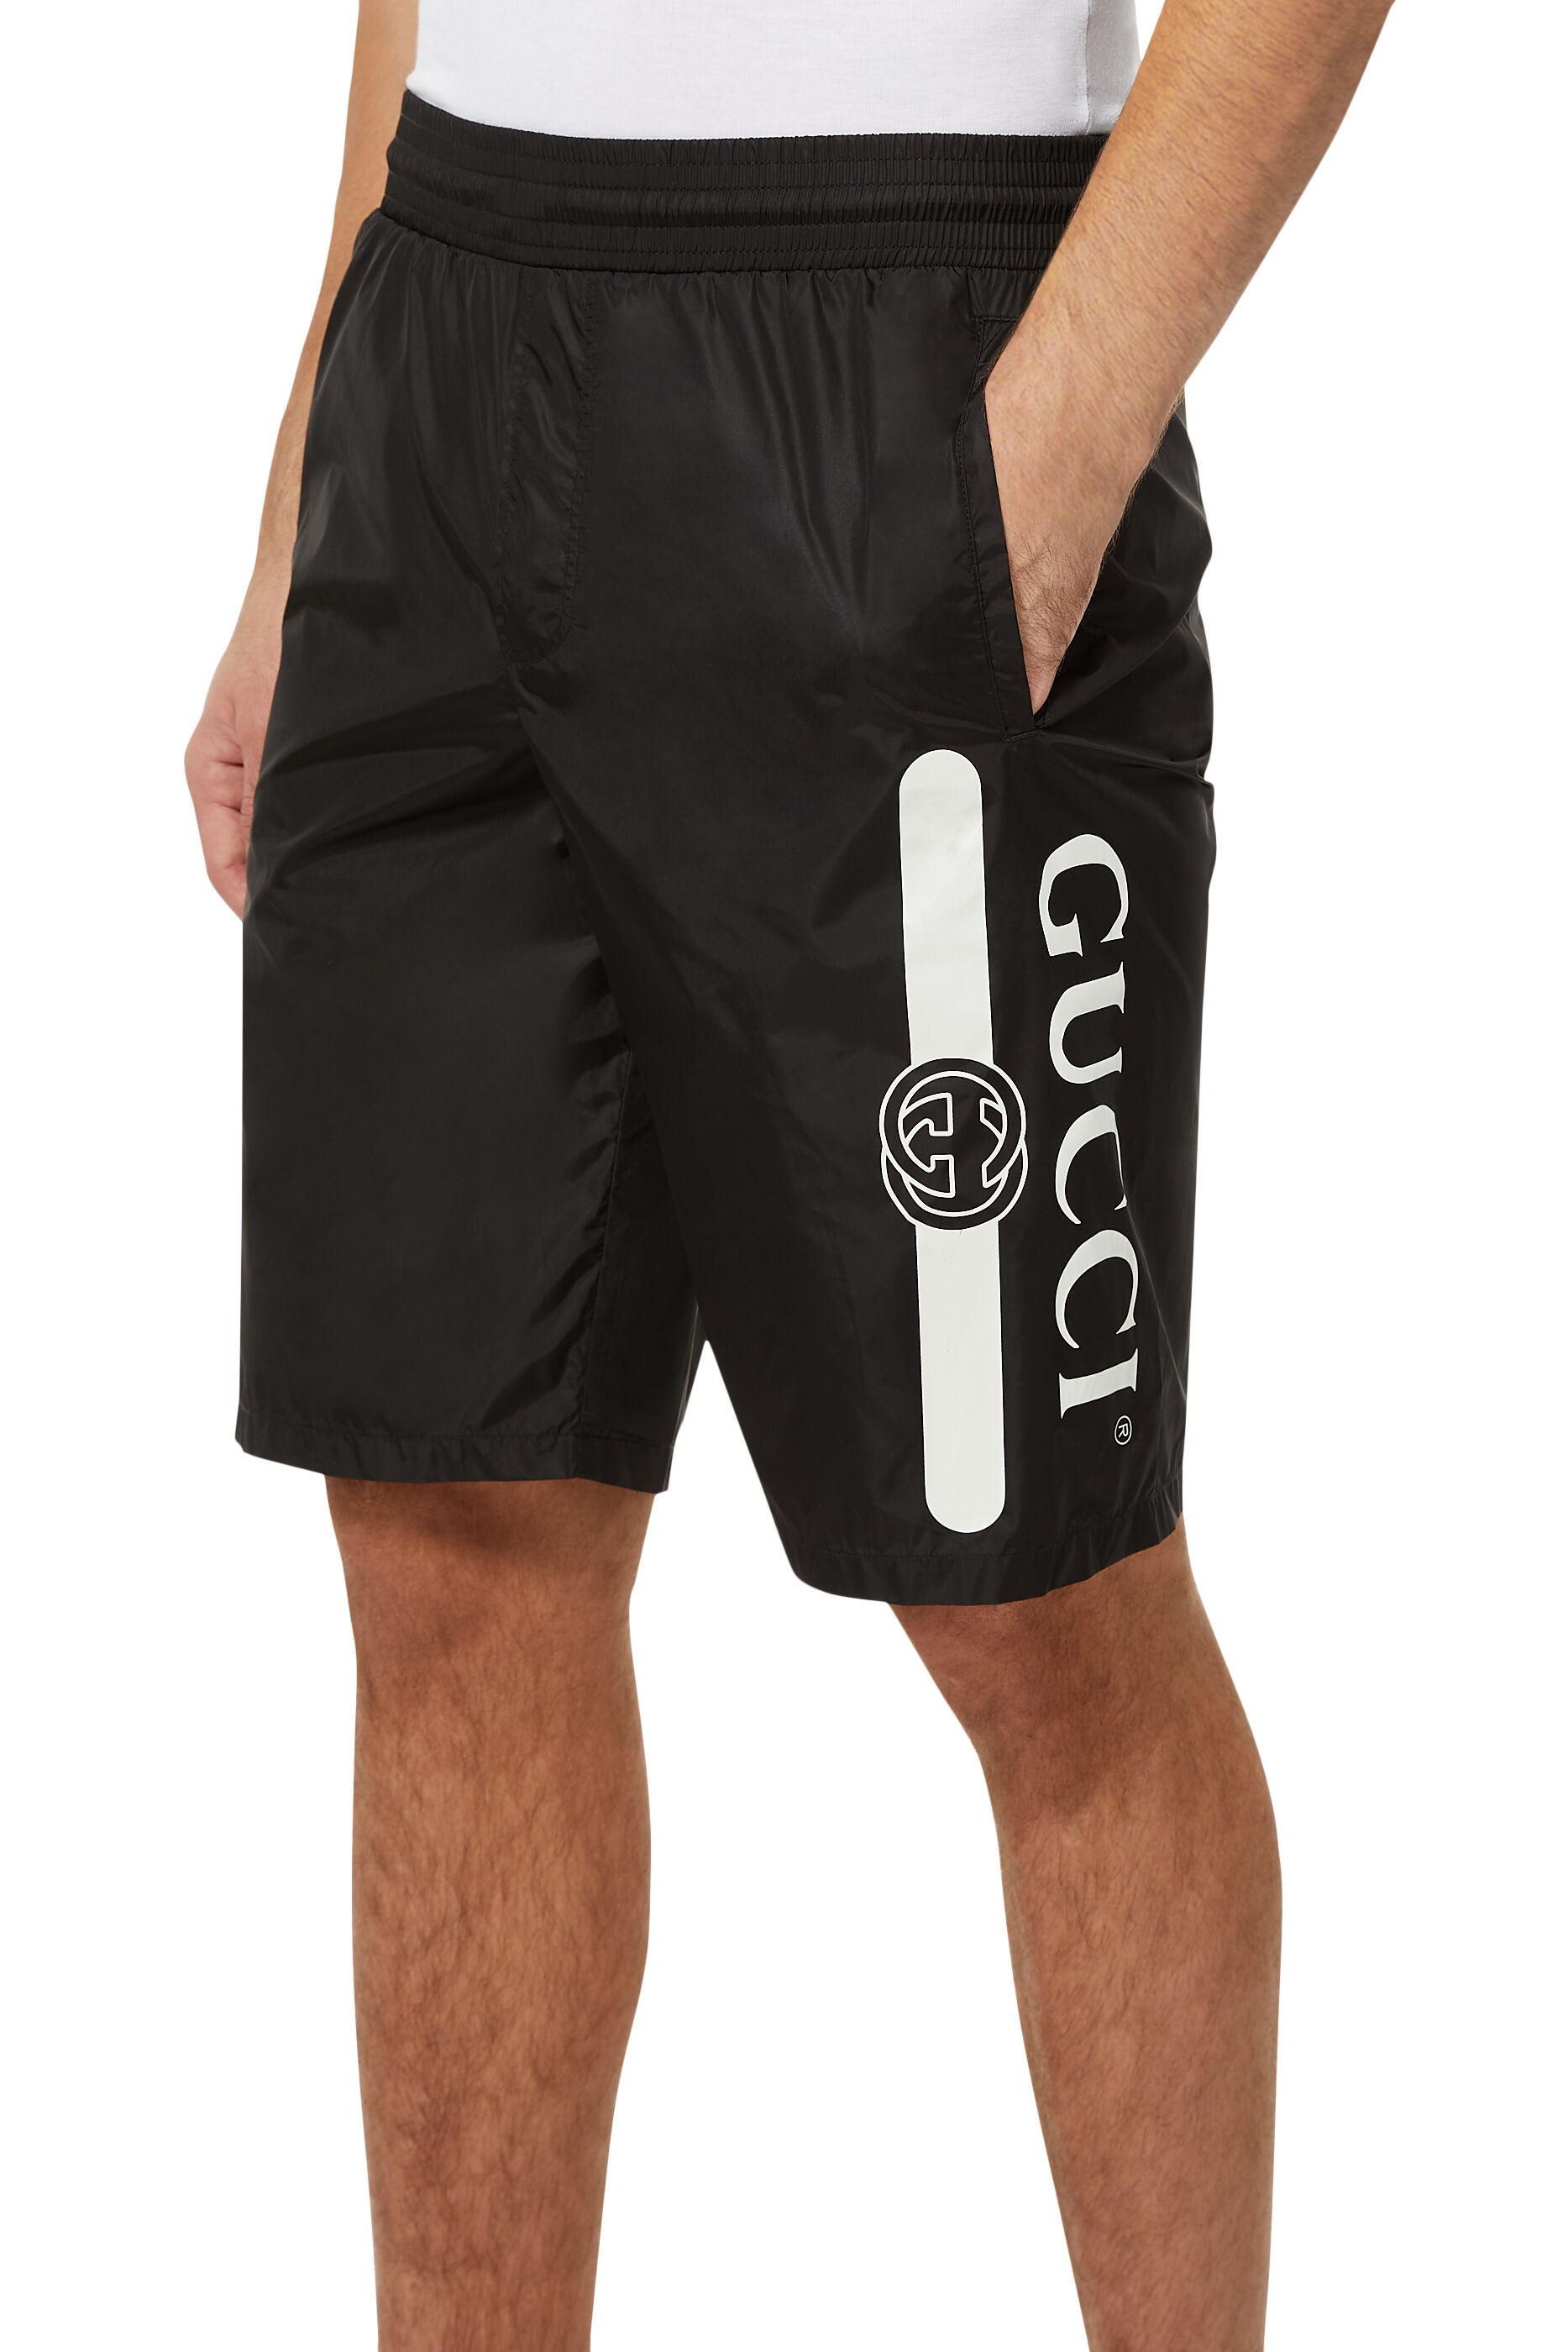 gucci logo shorts